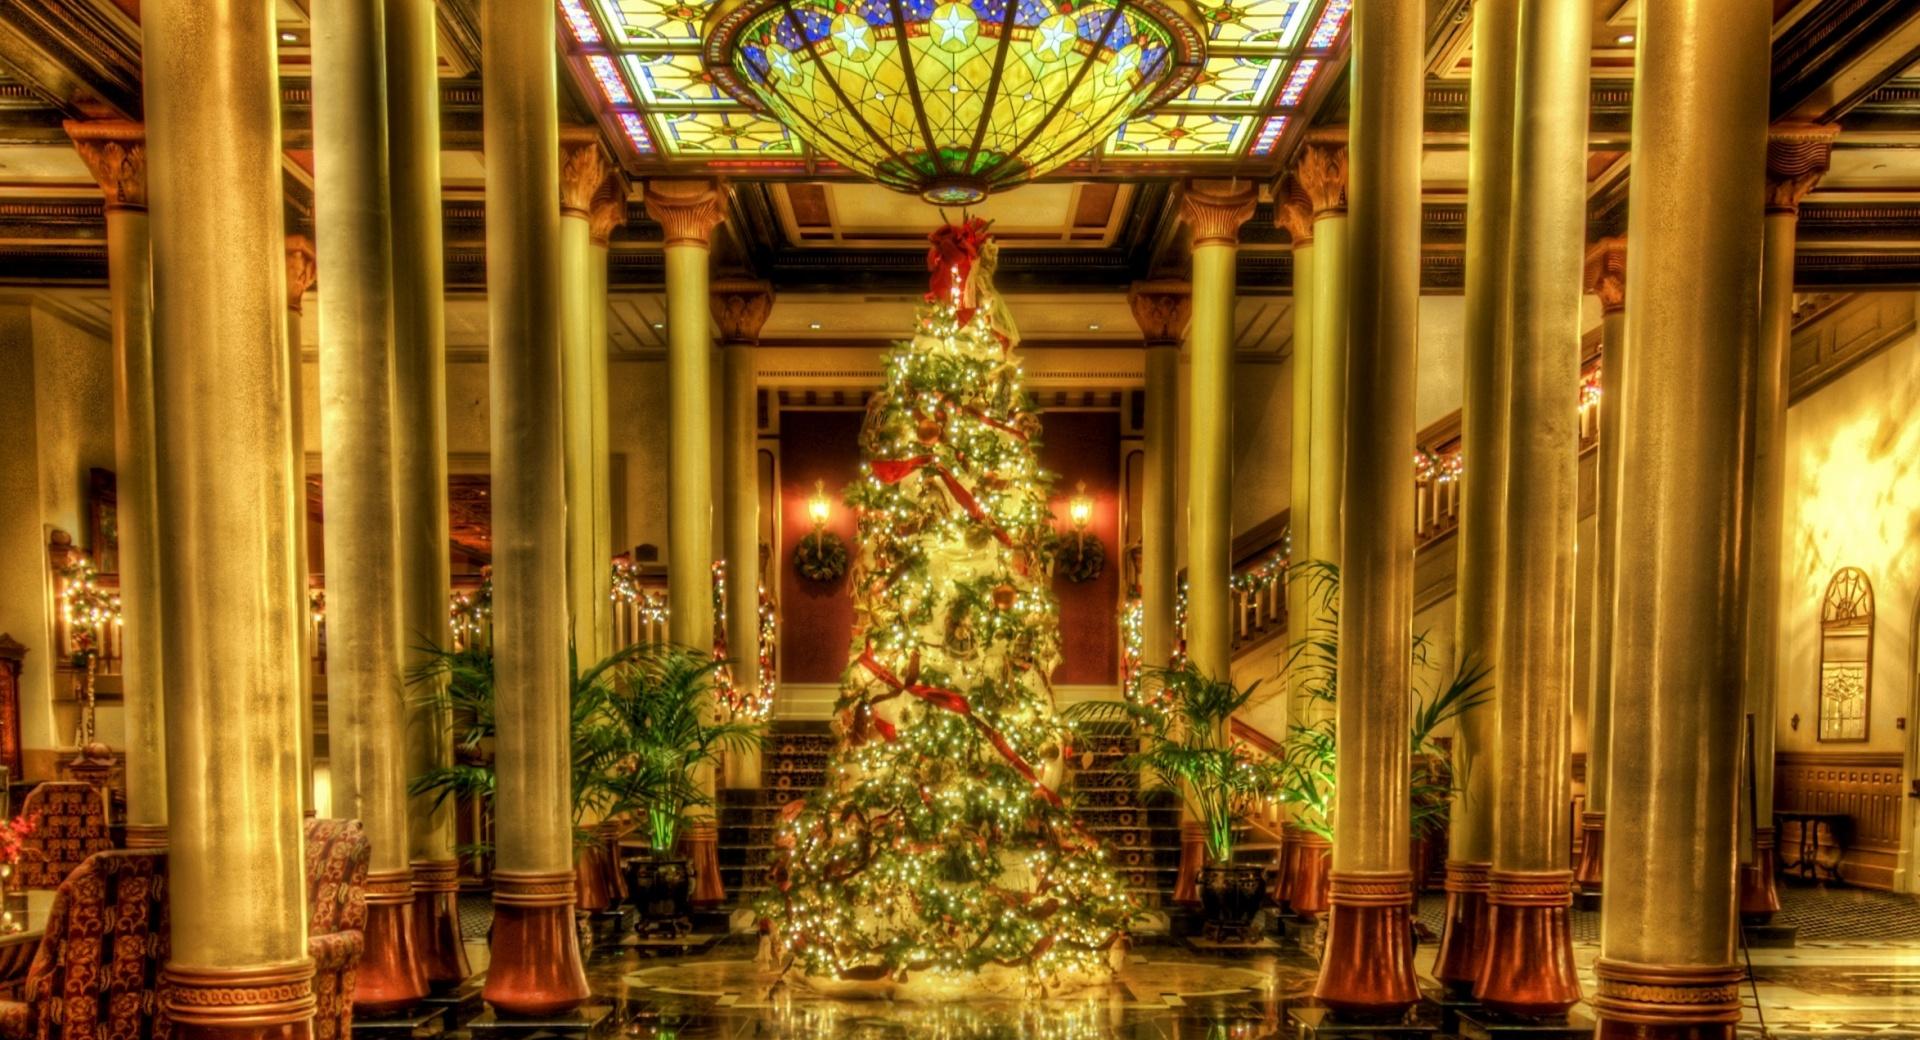 Christmas - Driskill Hotel Lobby, Texas at 1280 x 960 size wallpapers HD quality